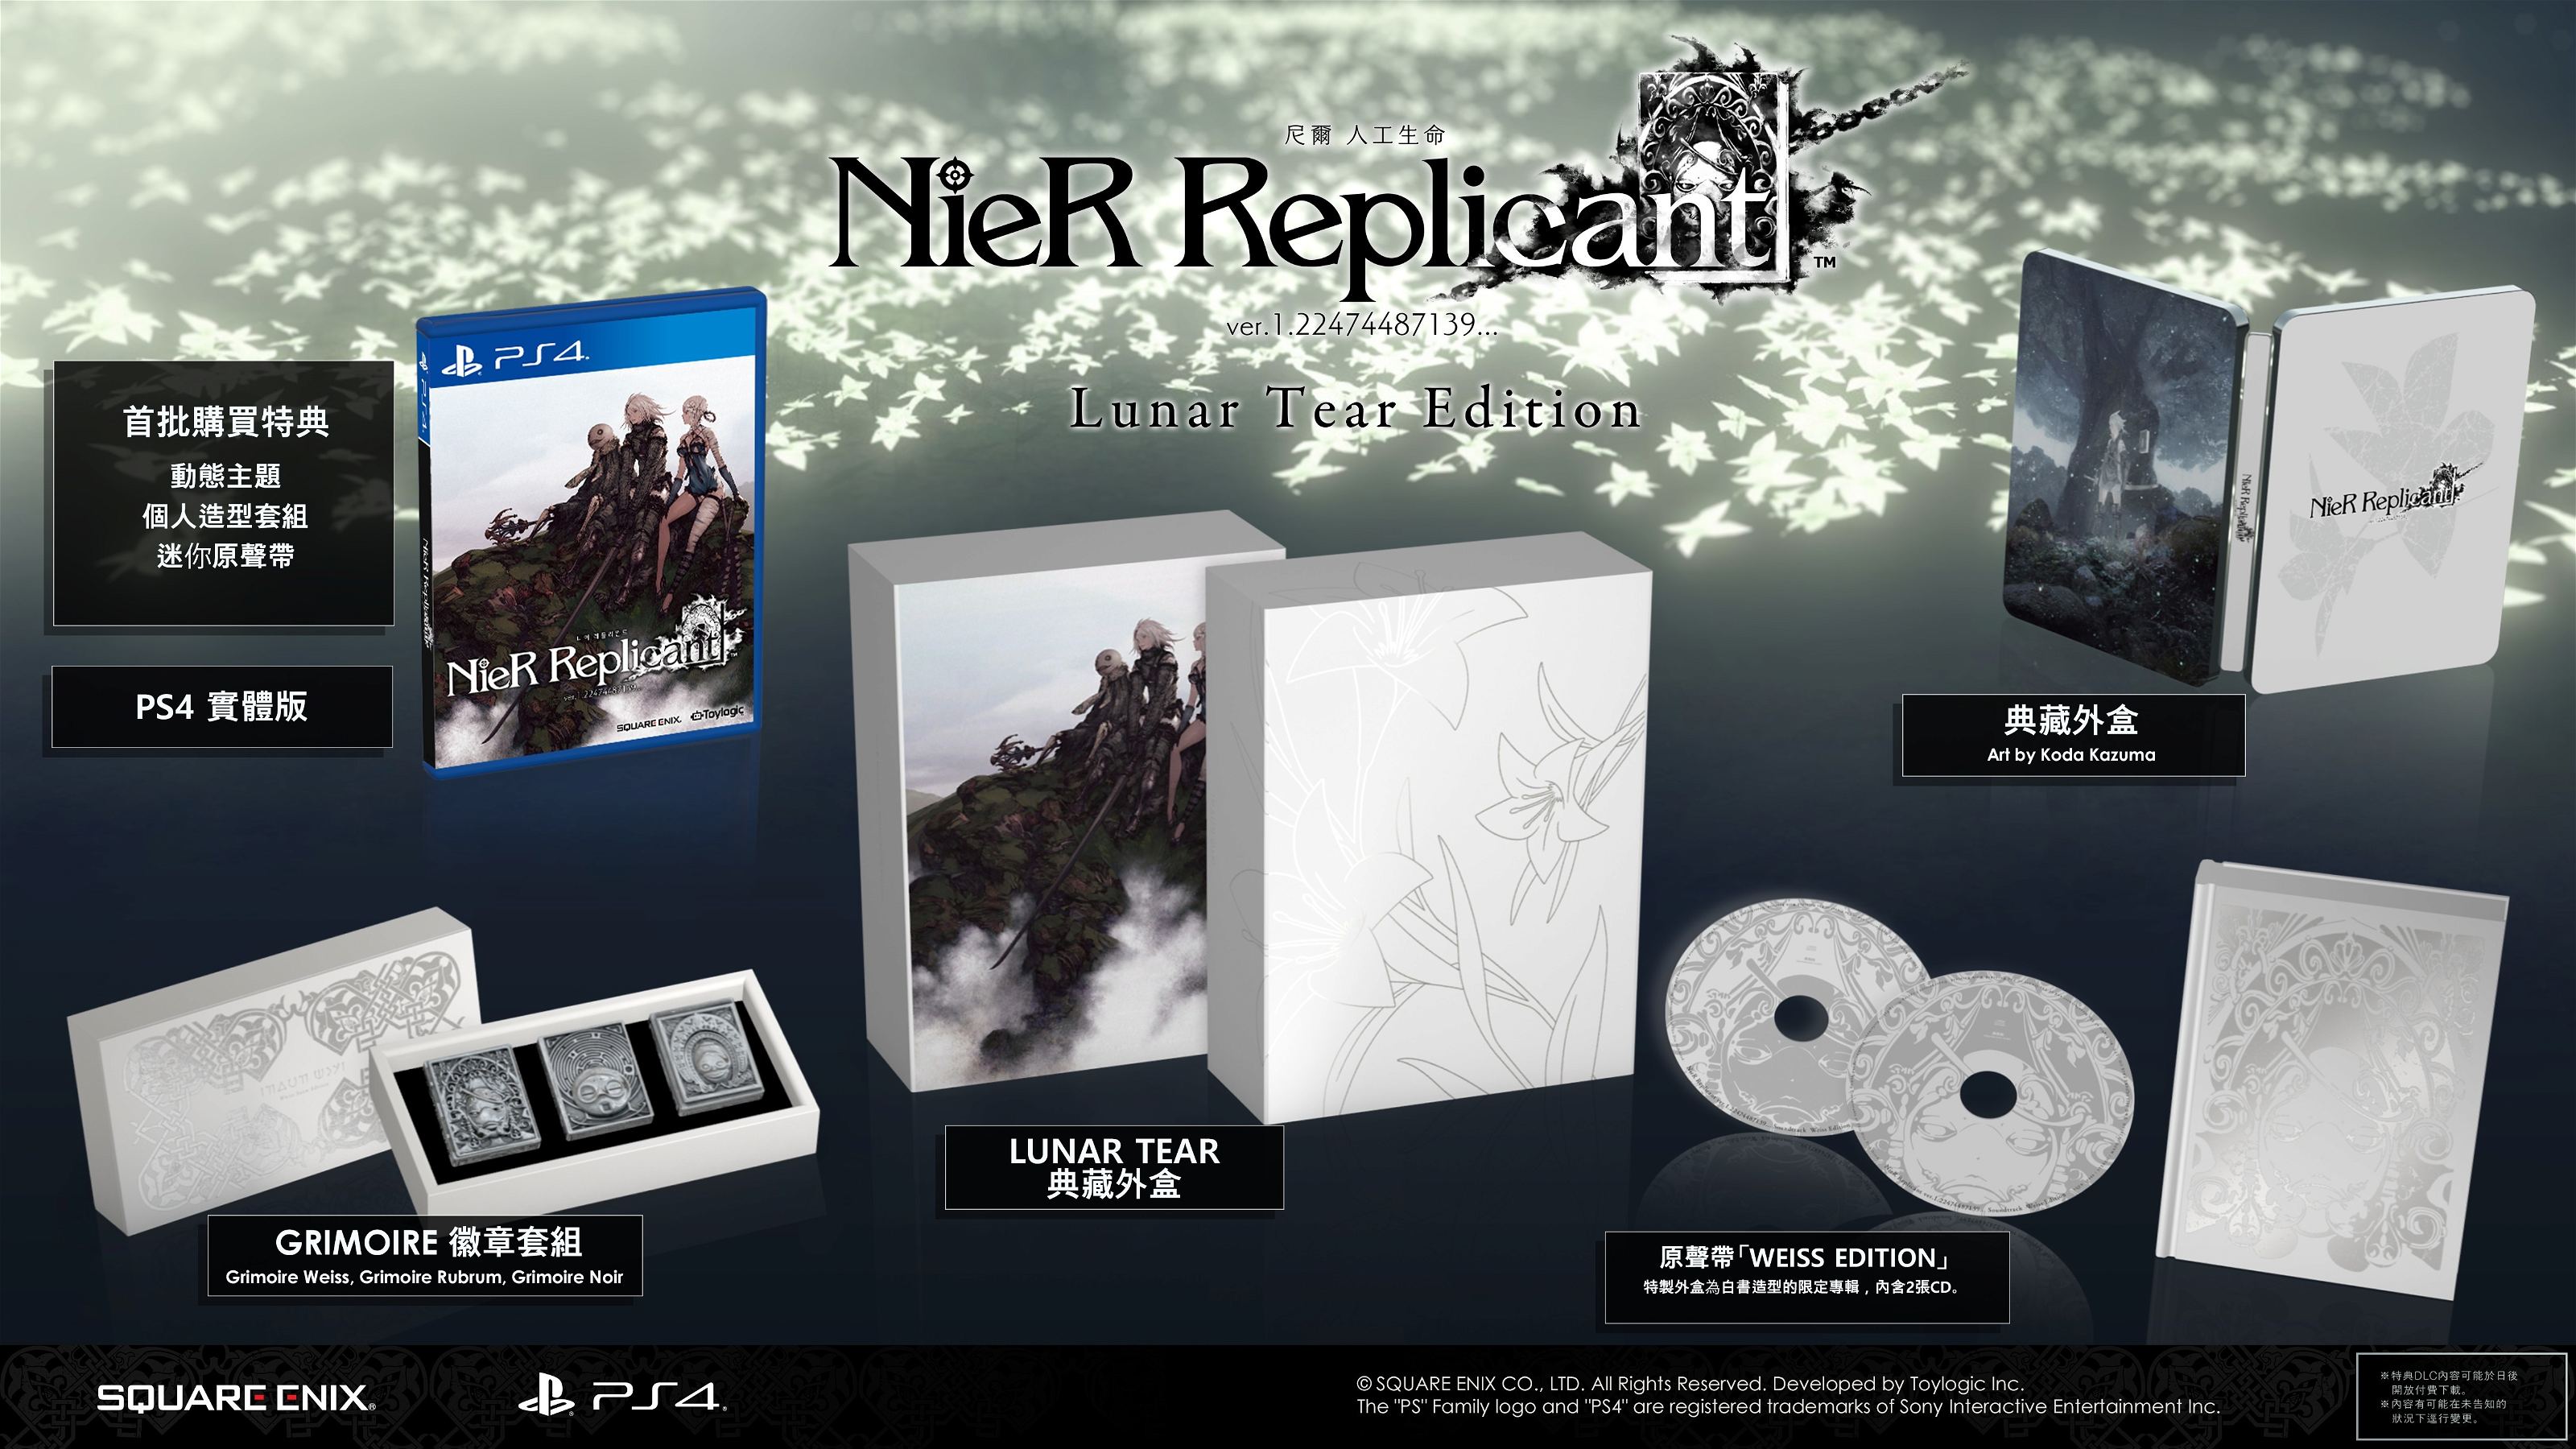 NieR Replicant ver.1.22474487139…, Square Enix, PlayStation 4